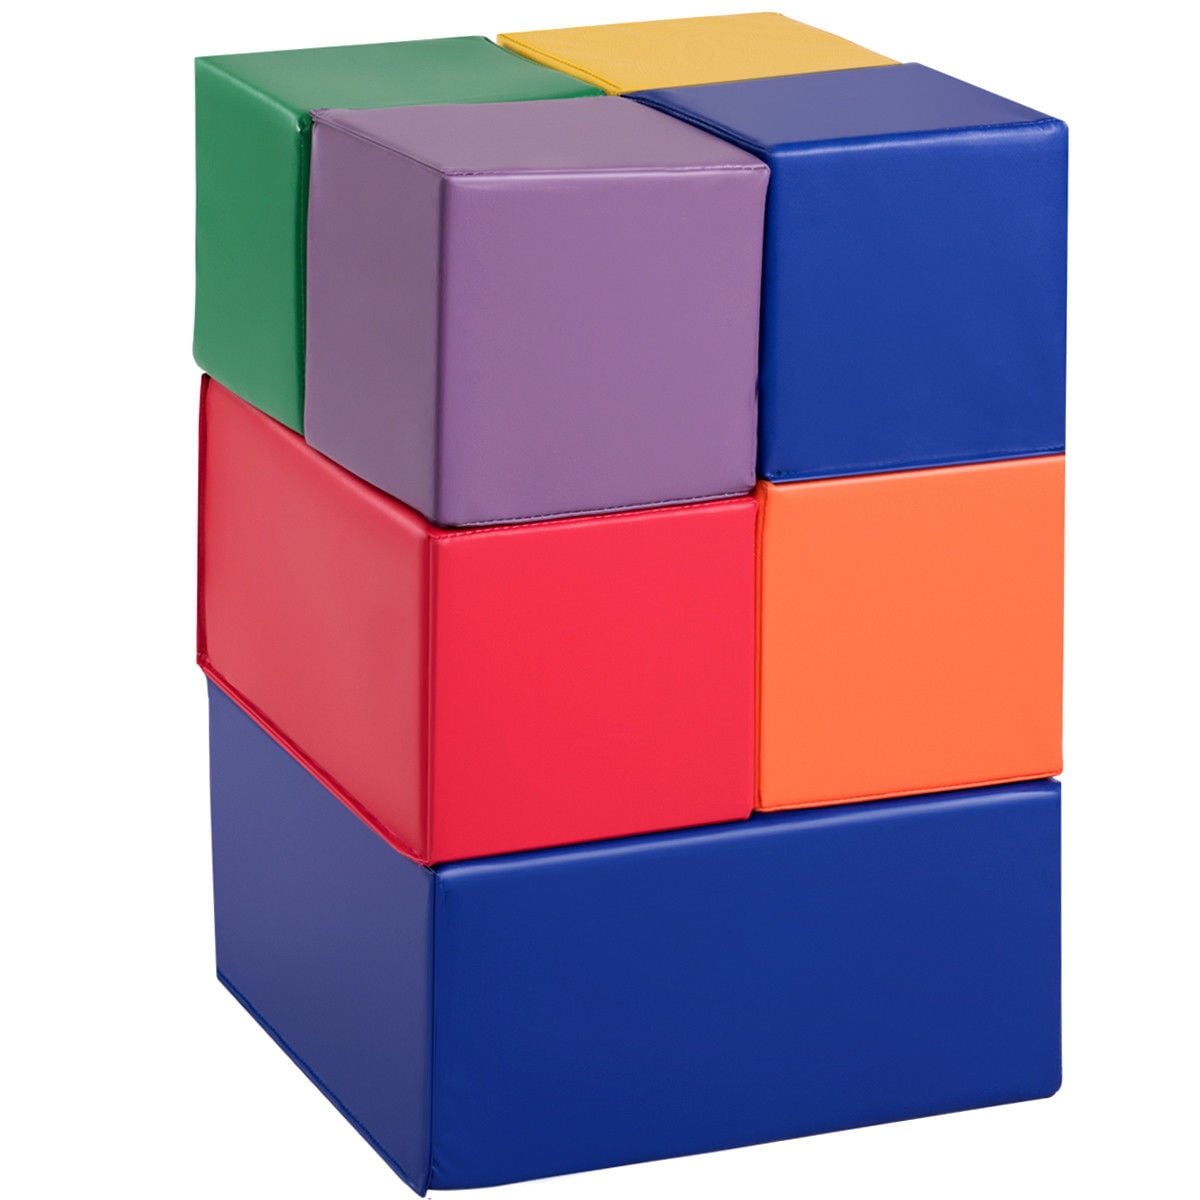 Soft Foam Blocks Playset - 6x6 in. Blocks, Set of 12 – Multicolor - JumpOff  Jo